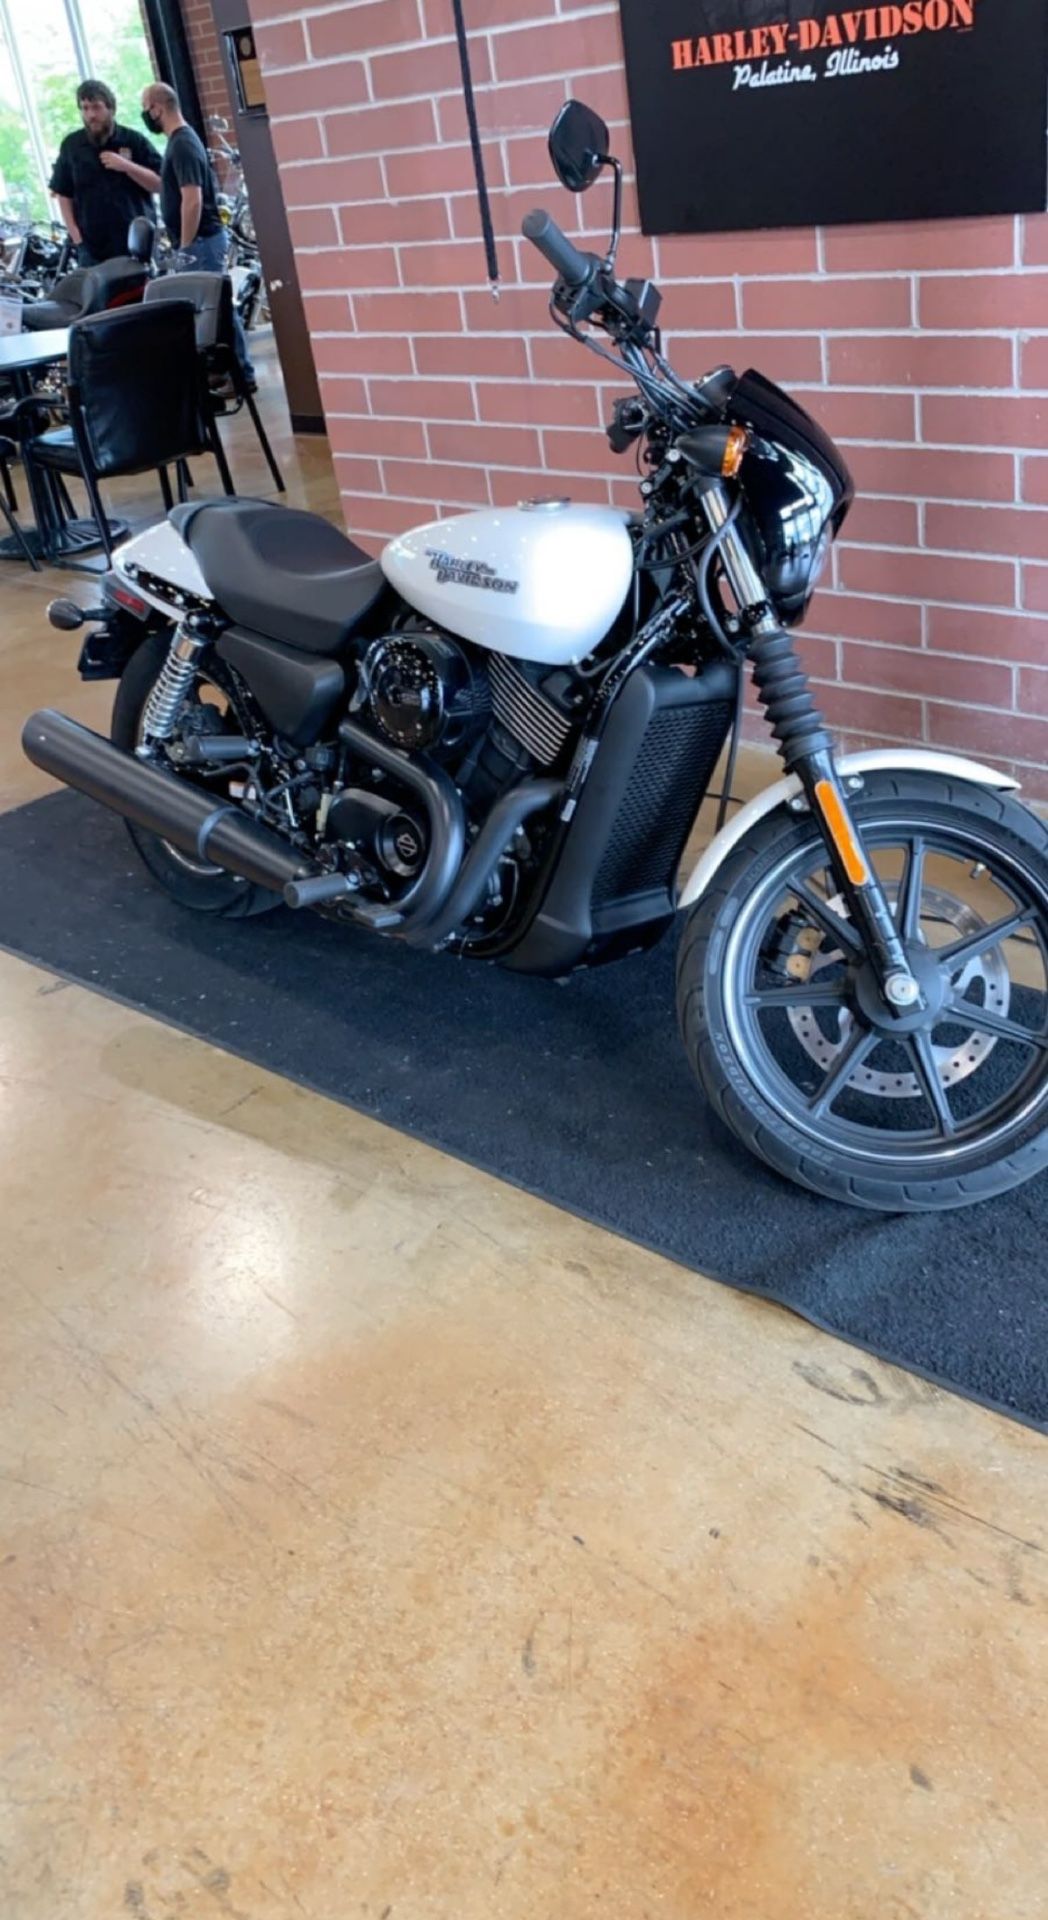 2018 Harley Davidson Street 750